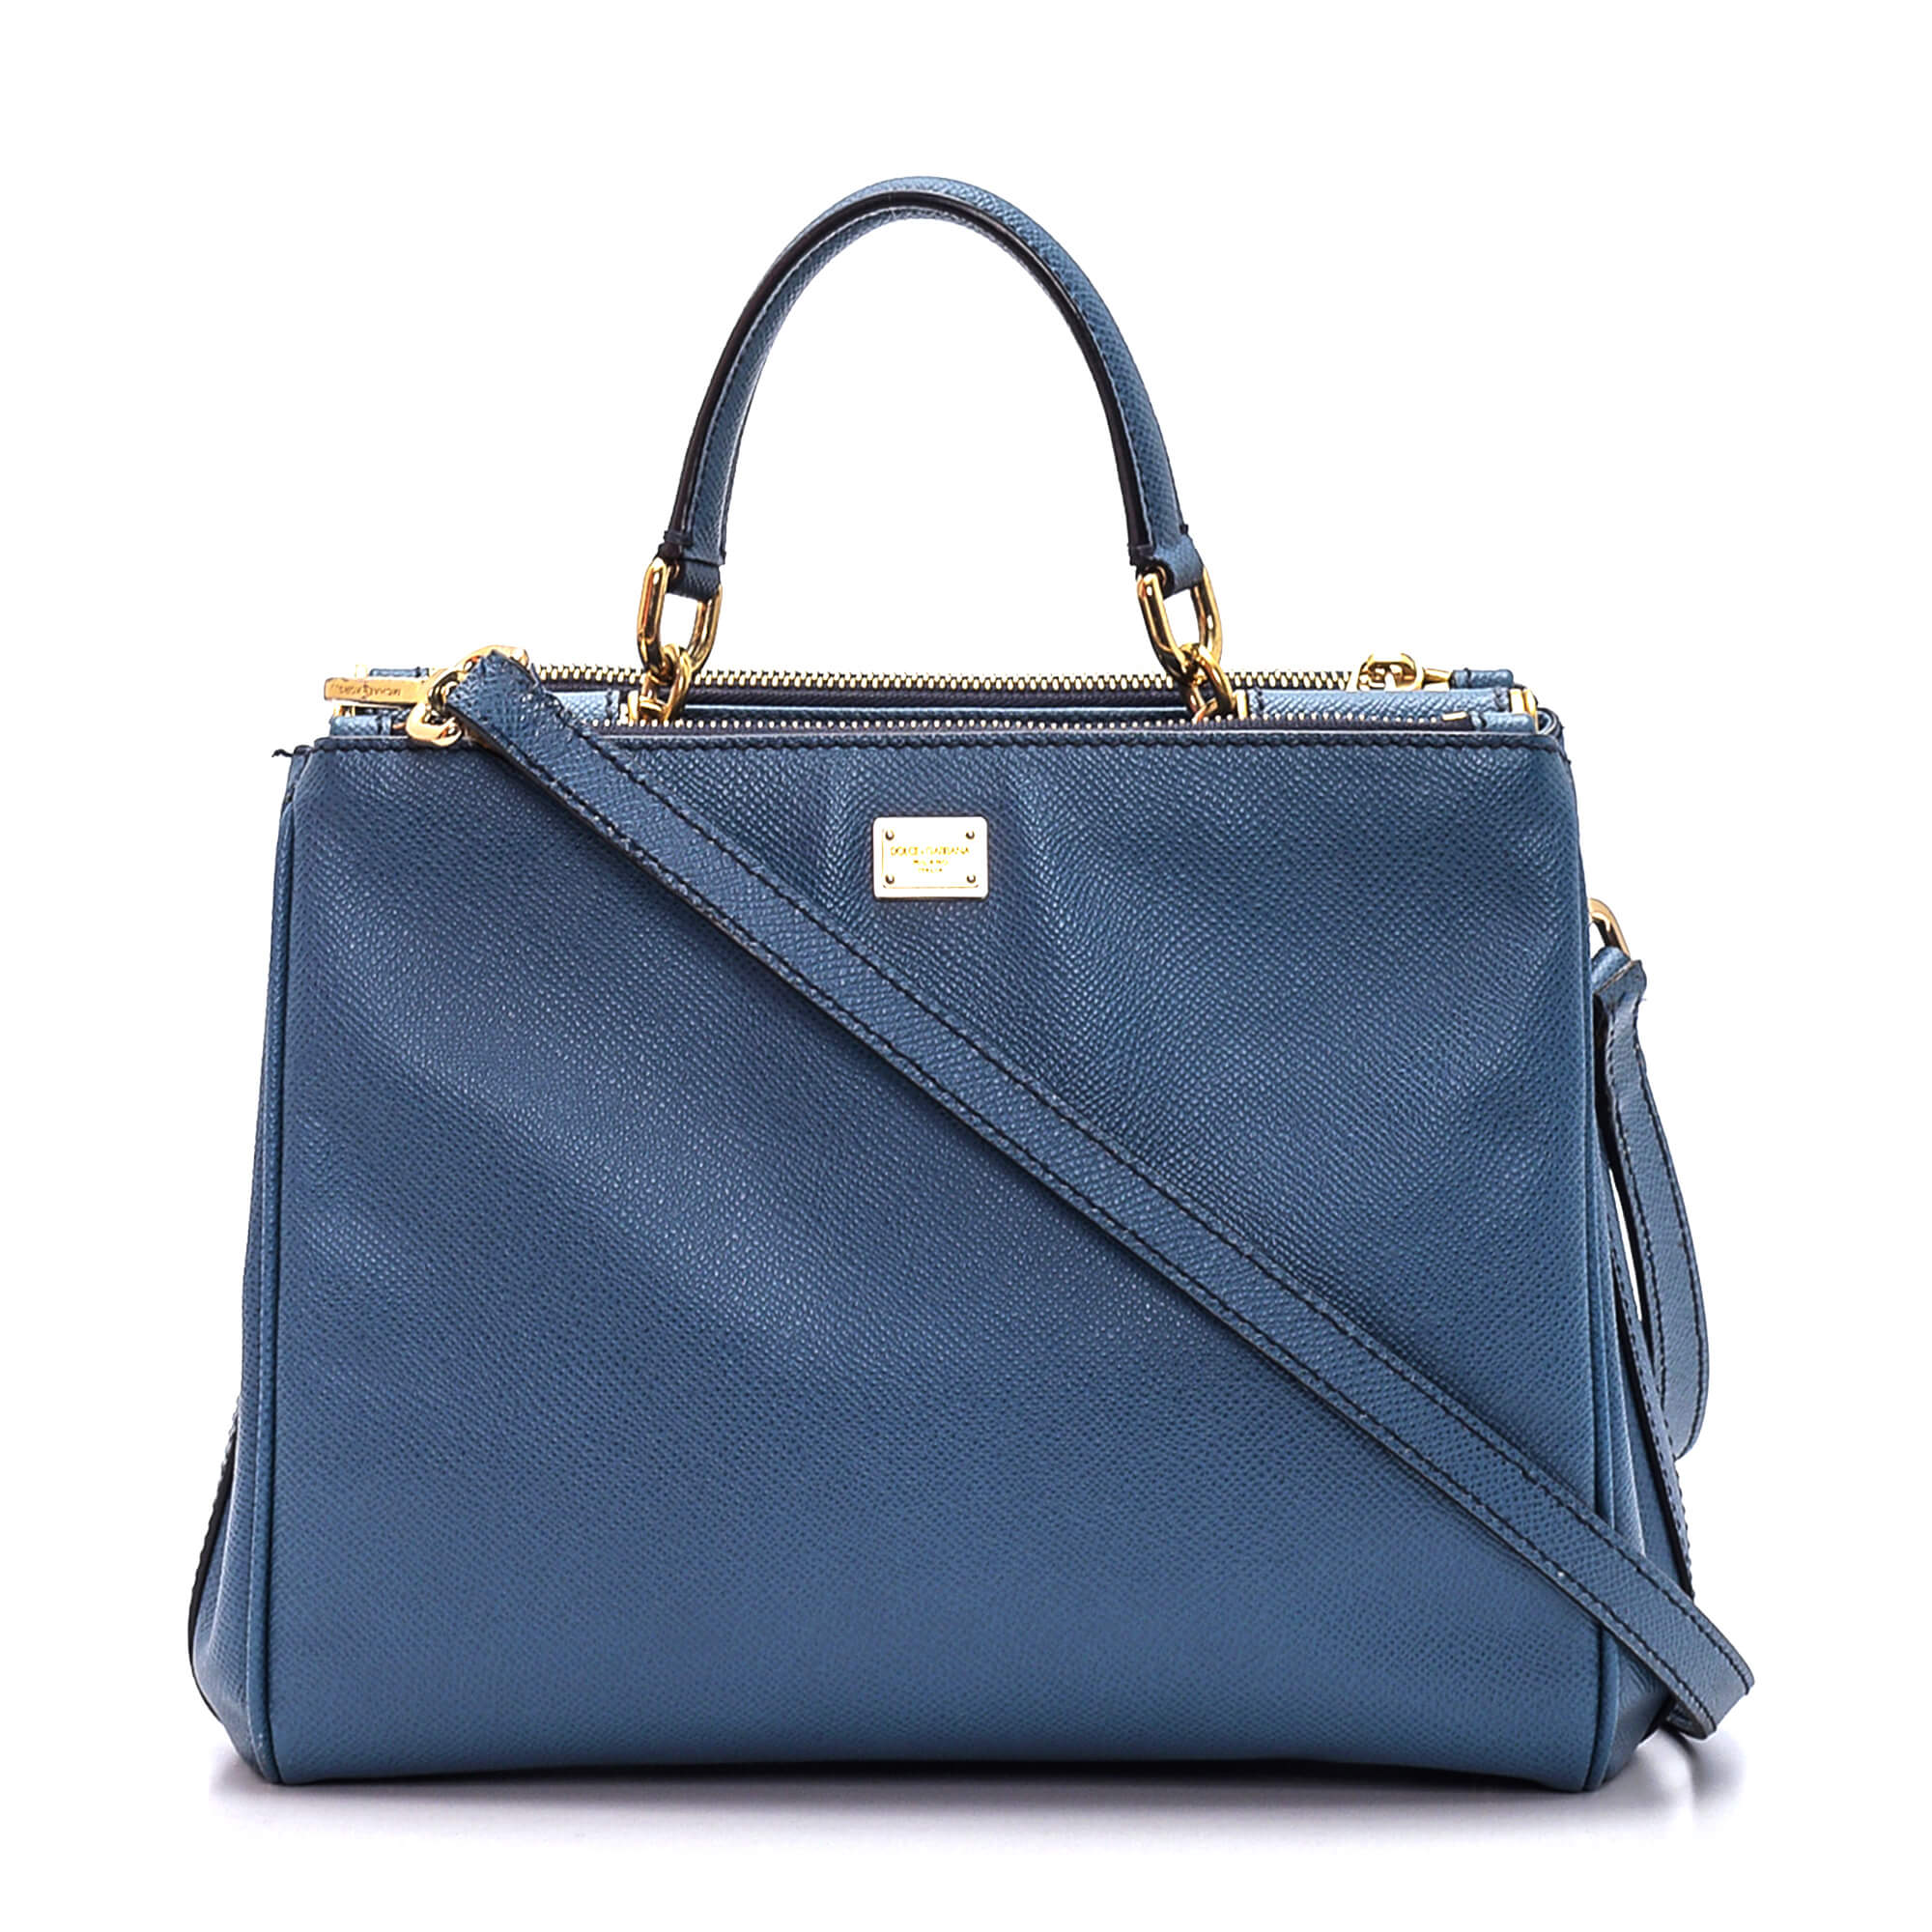 Dolce&Gabbana - Blue Leather Sicily Shopping Bag 